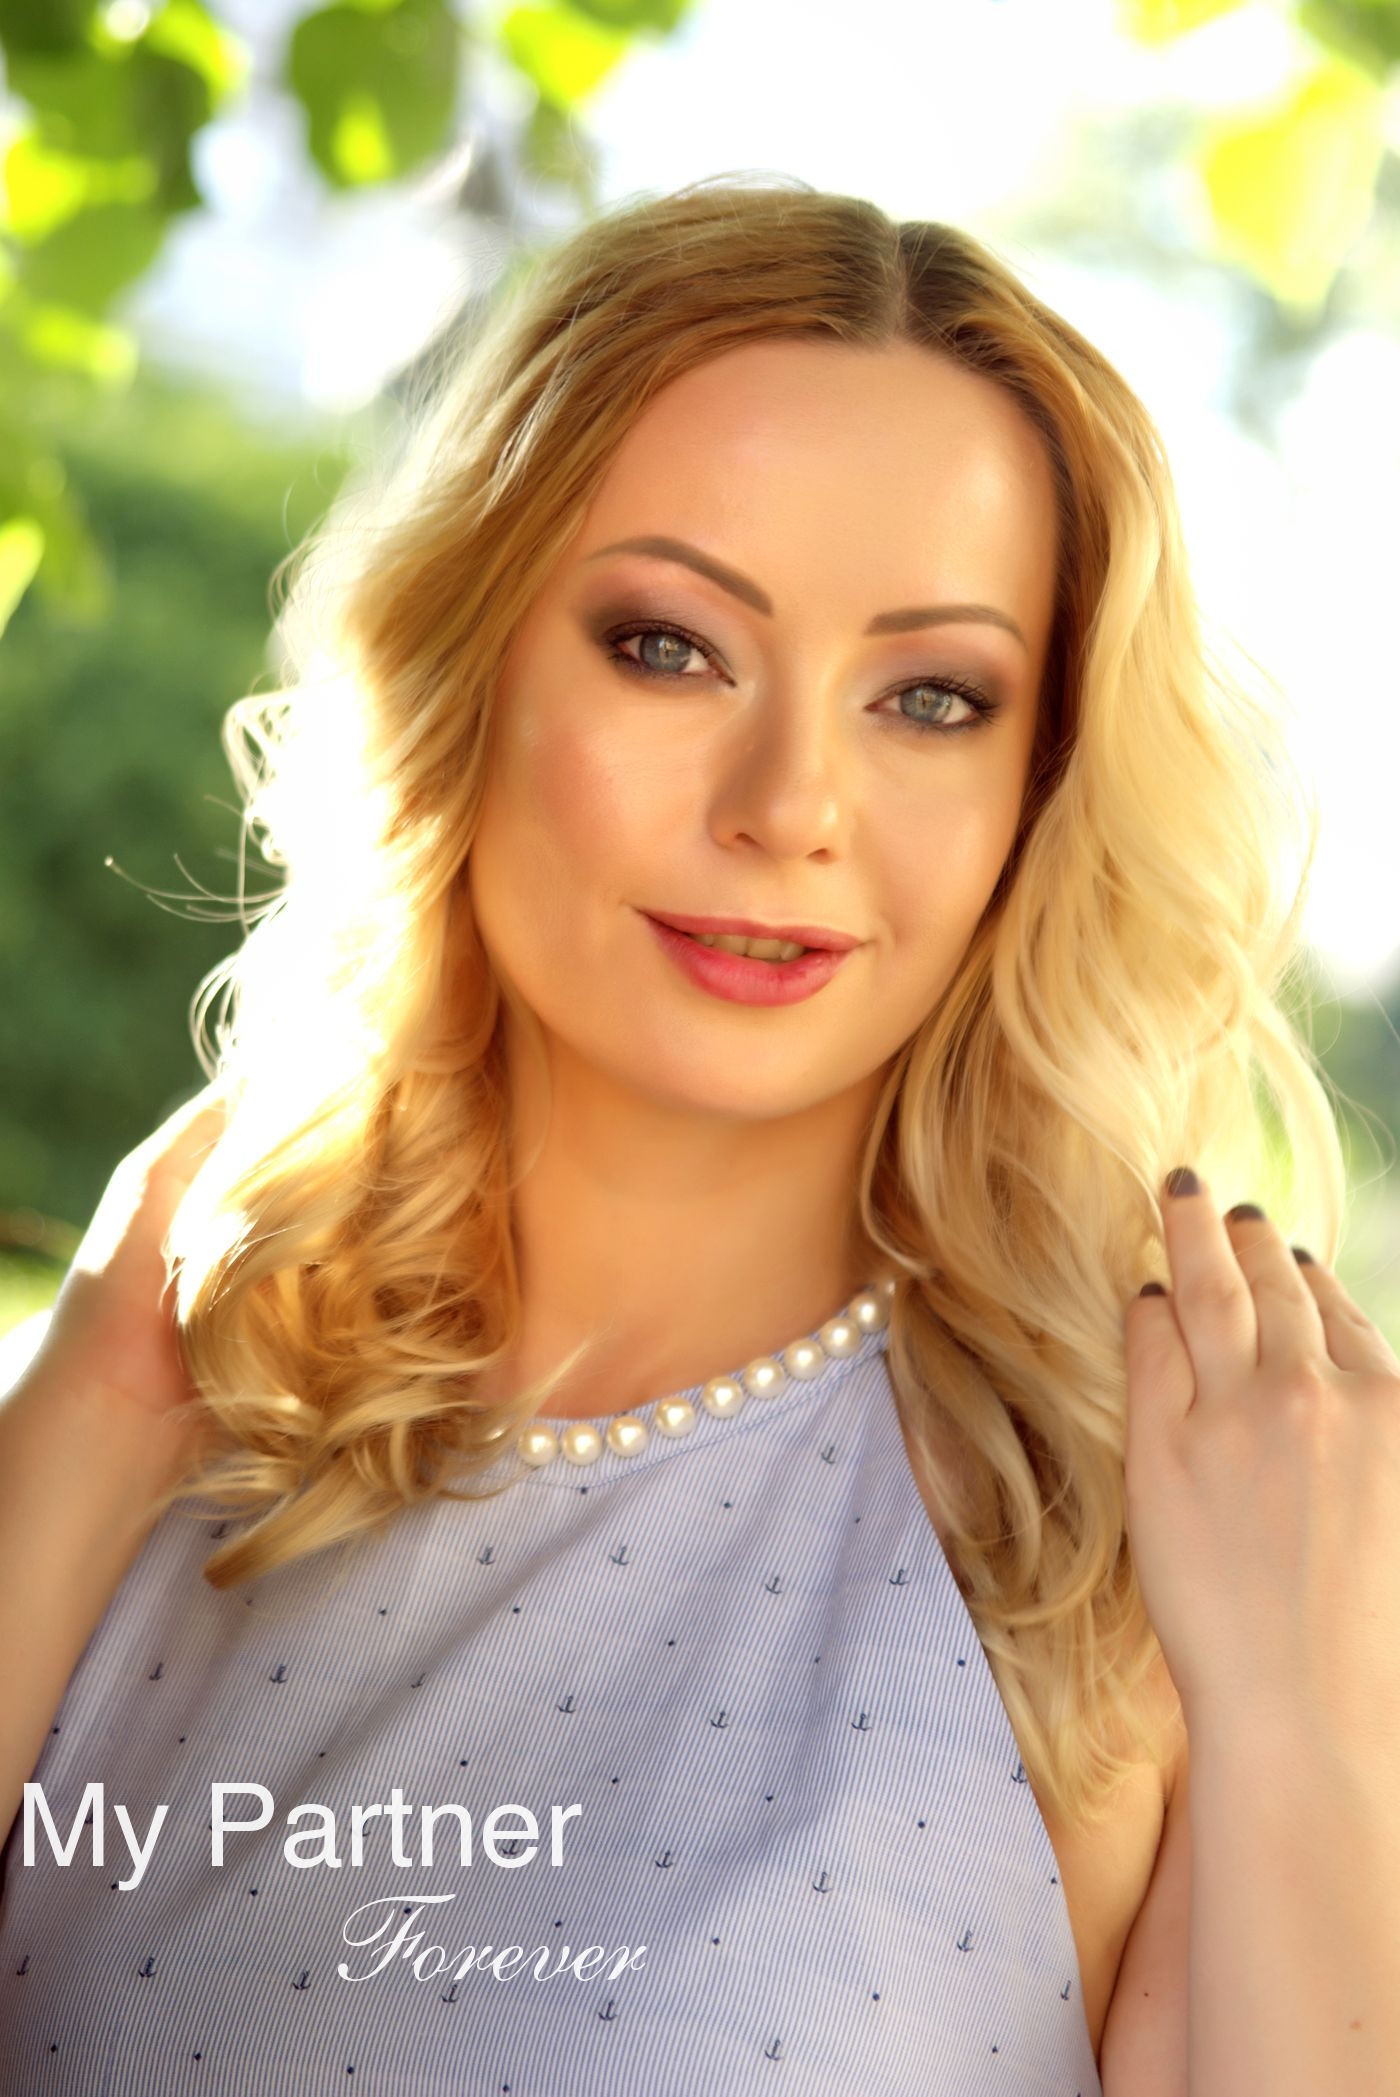 Datingsite to Meet Gorgeous Ukrainian Girl Michele from Kiev, Ukraine